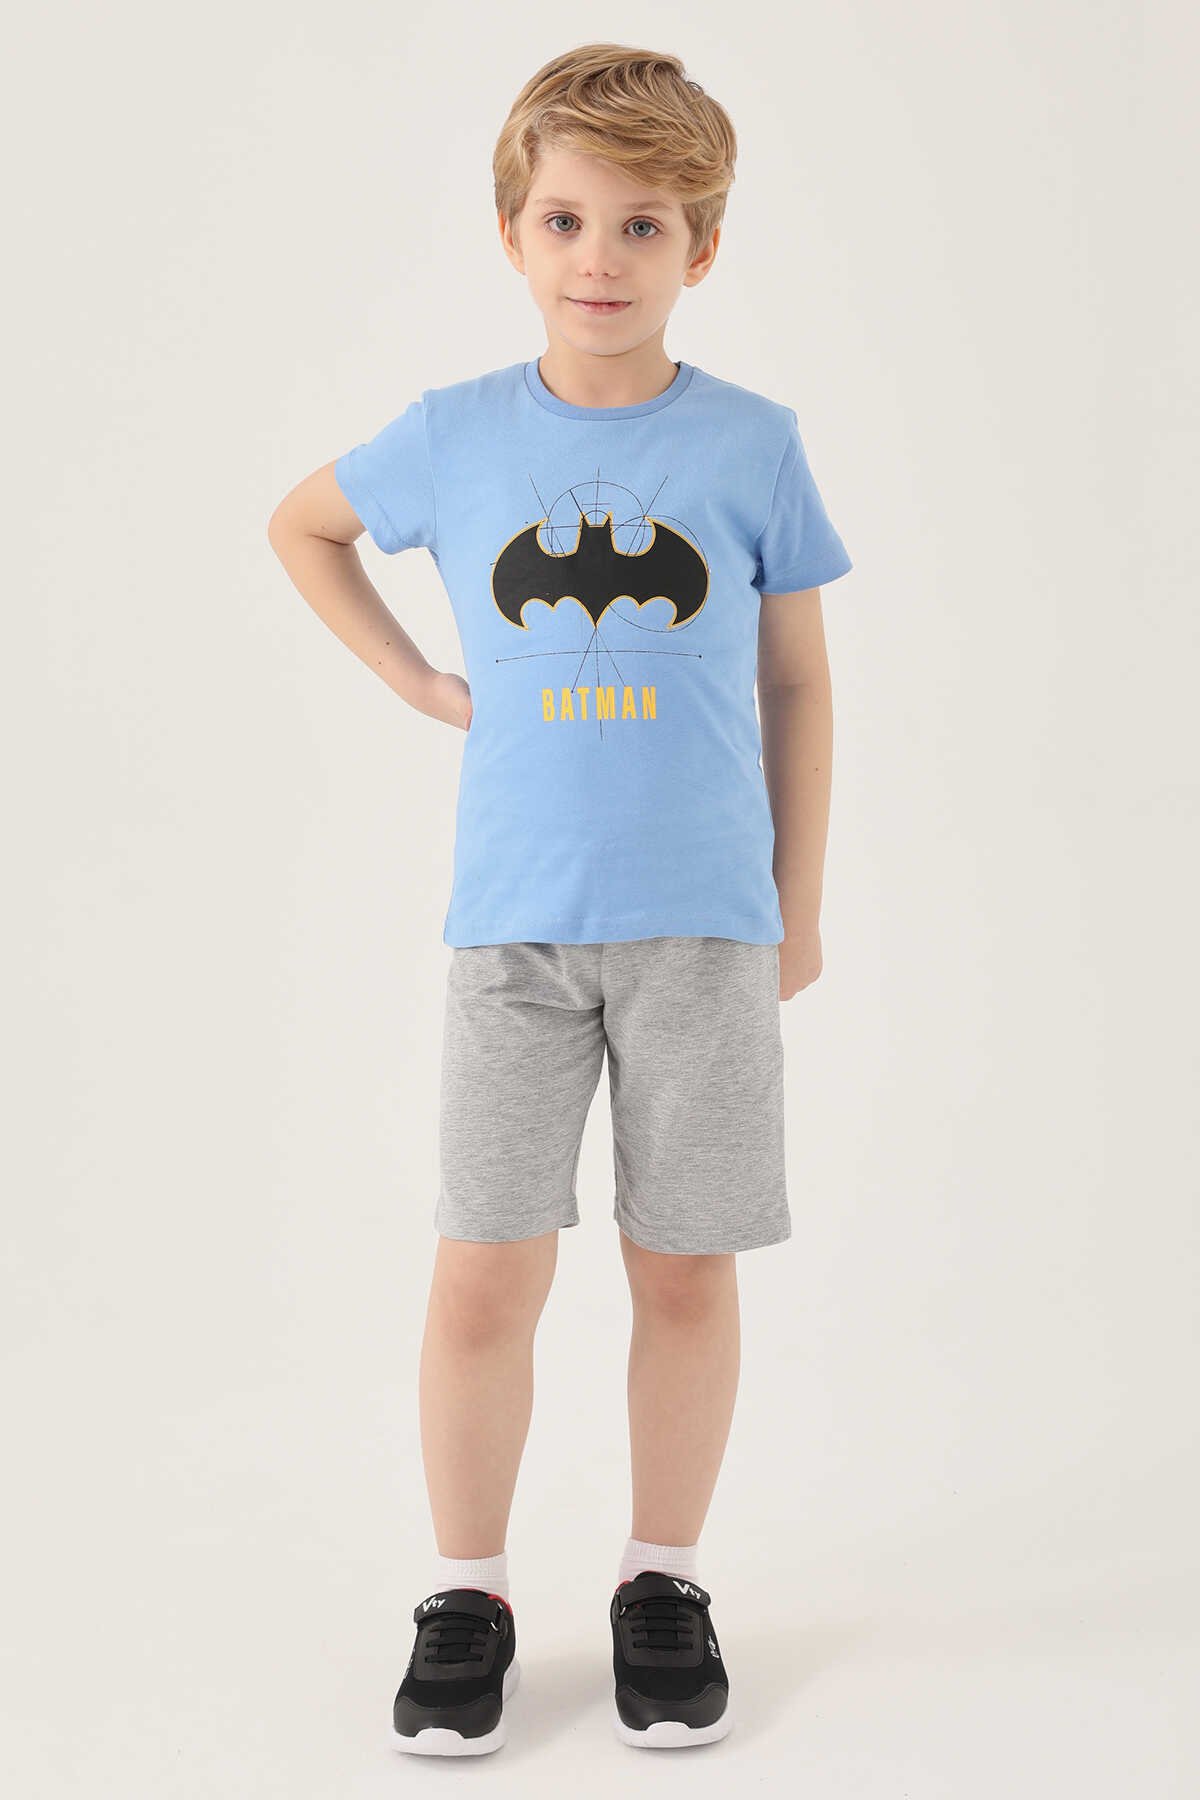 Batman - Batman L1580-2 Erkek Çocuk T-Shirt Indigo